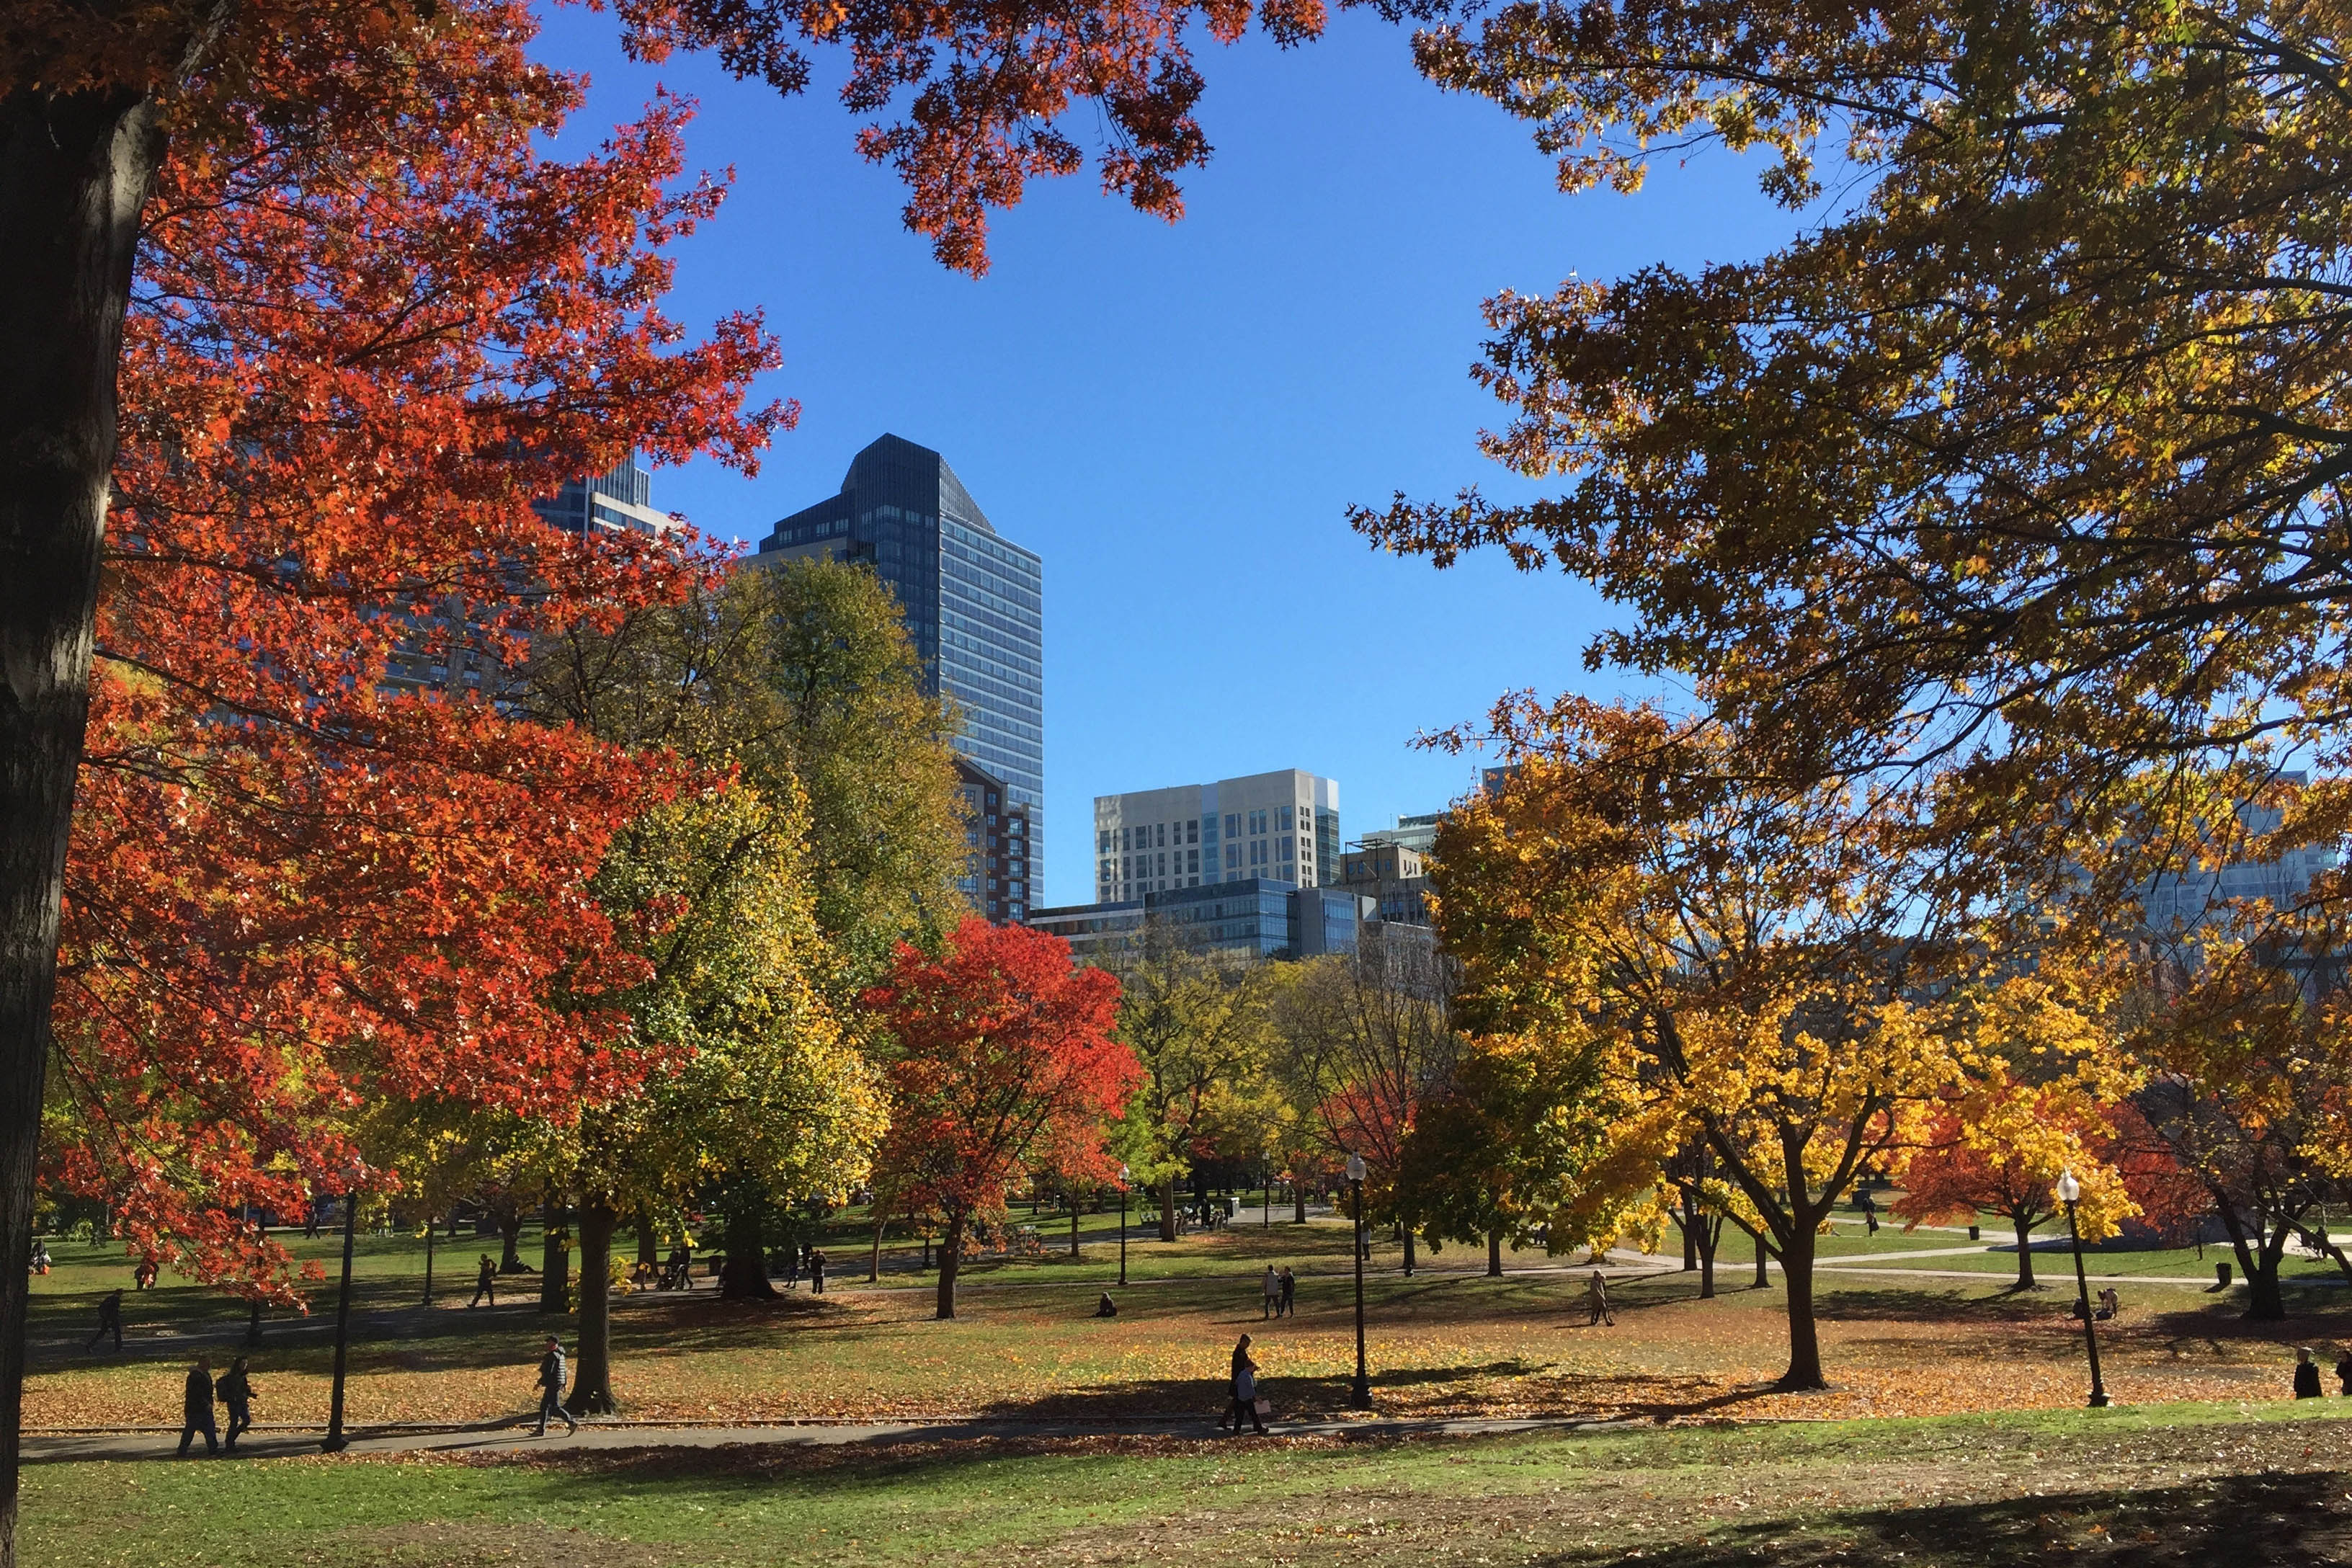 Explore Boston in beautiful autumn | Travel Nation